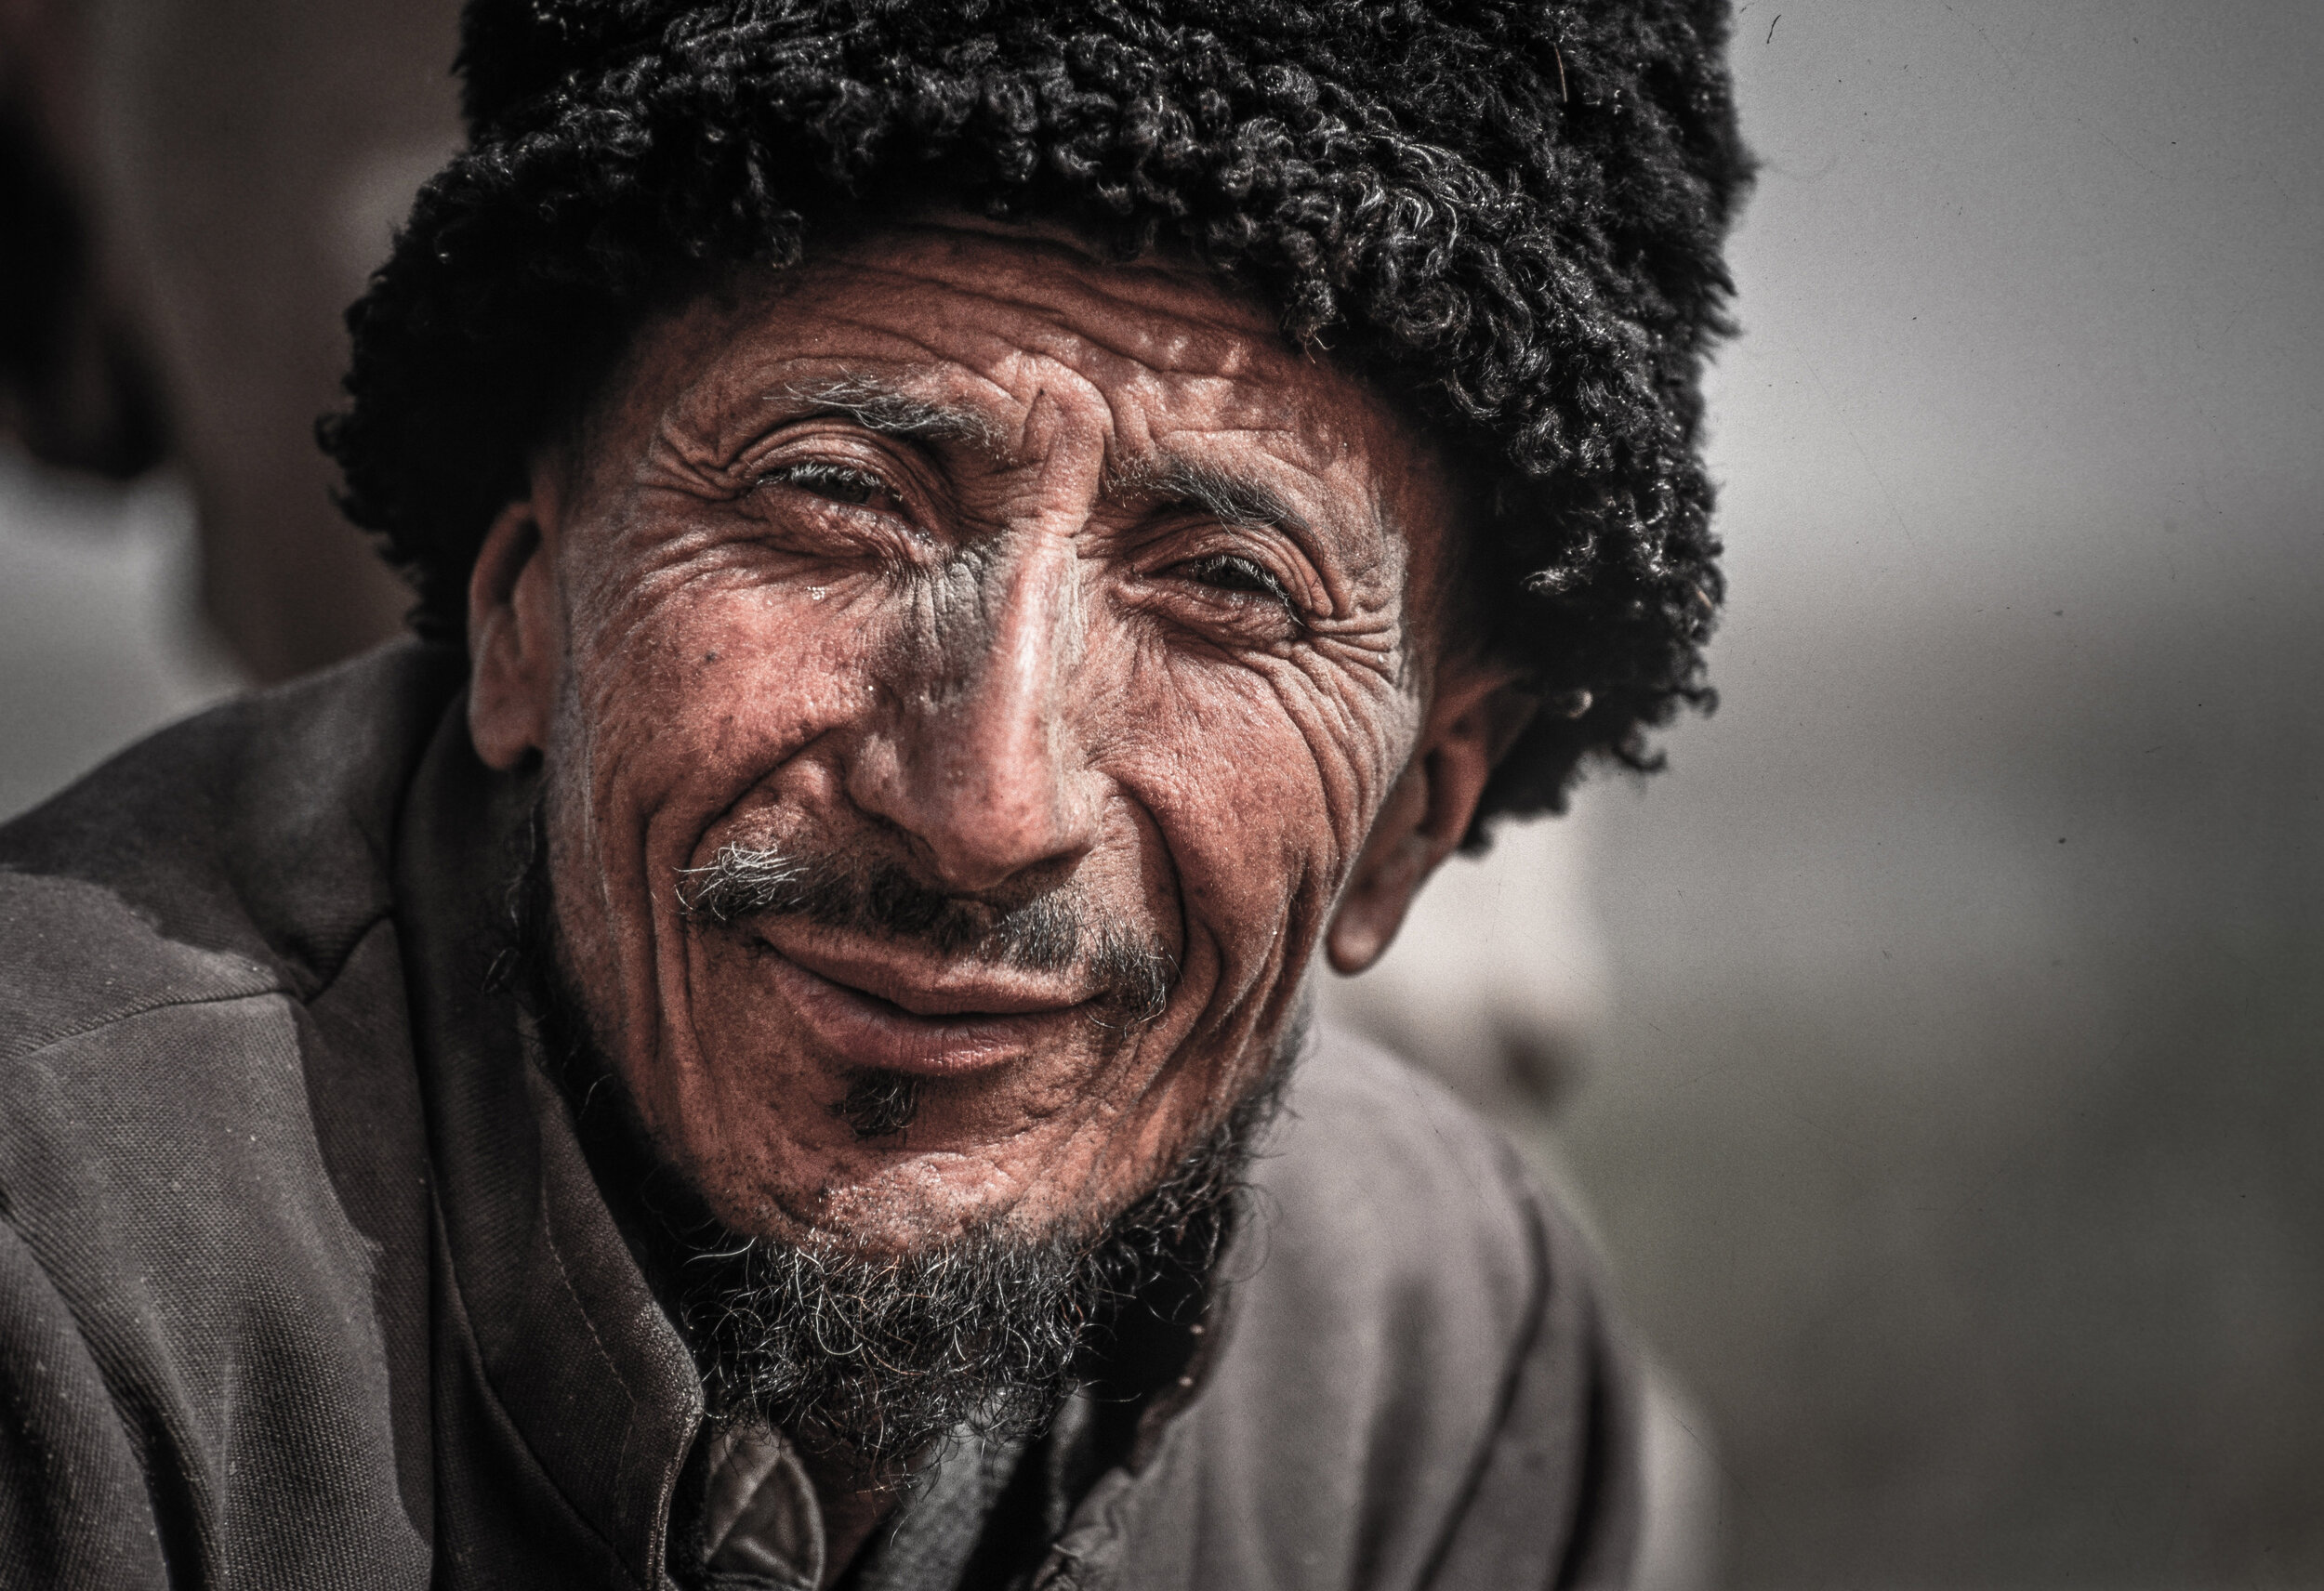  A Uighur man just after his morning prayers.  